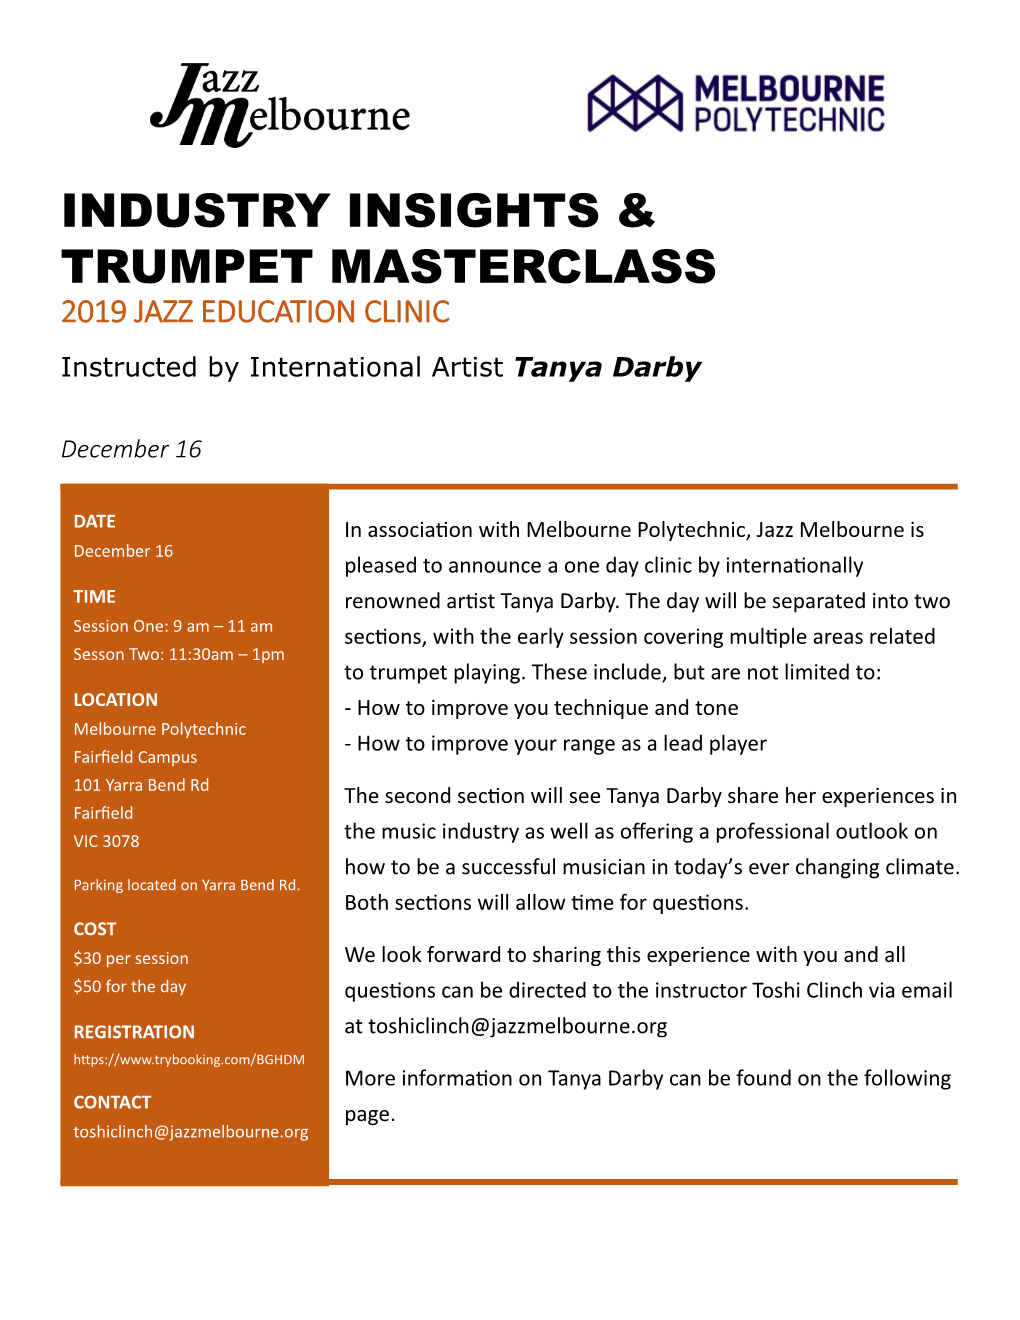 Industry Insights & Trumpet Masterclass